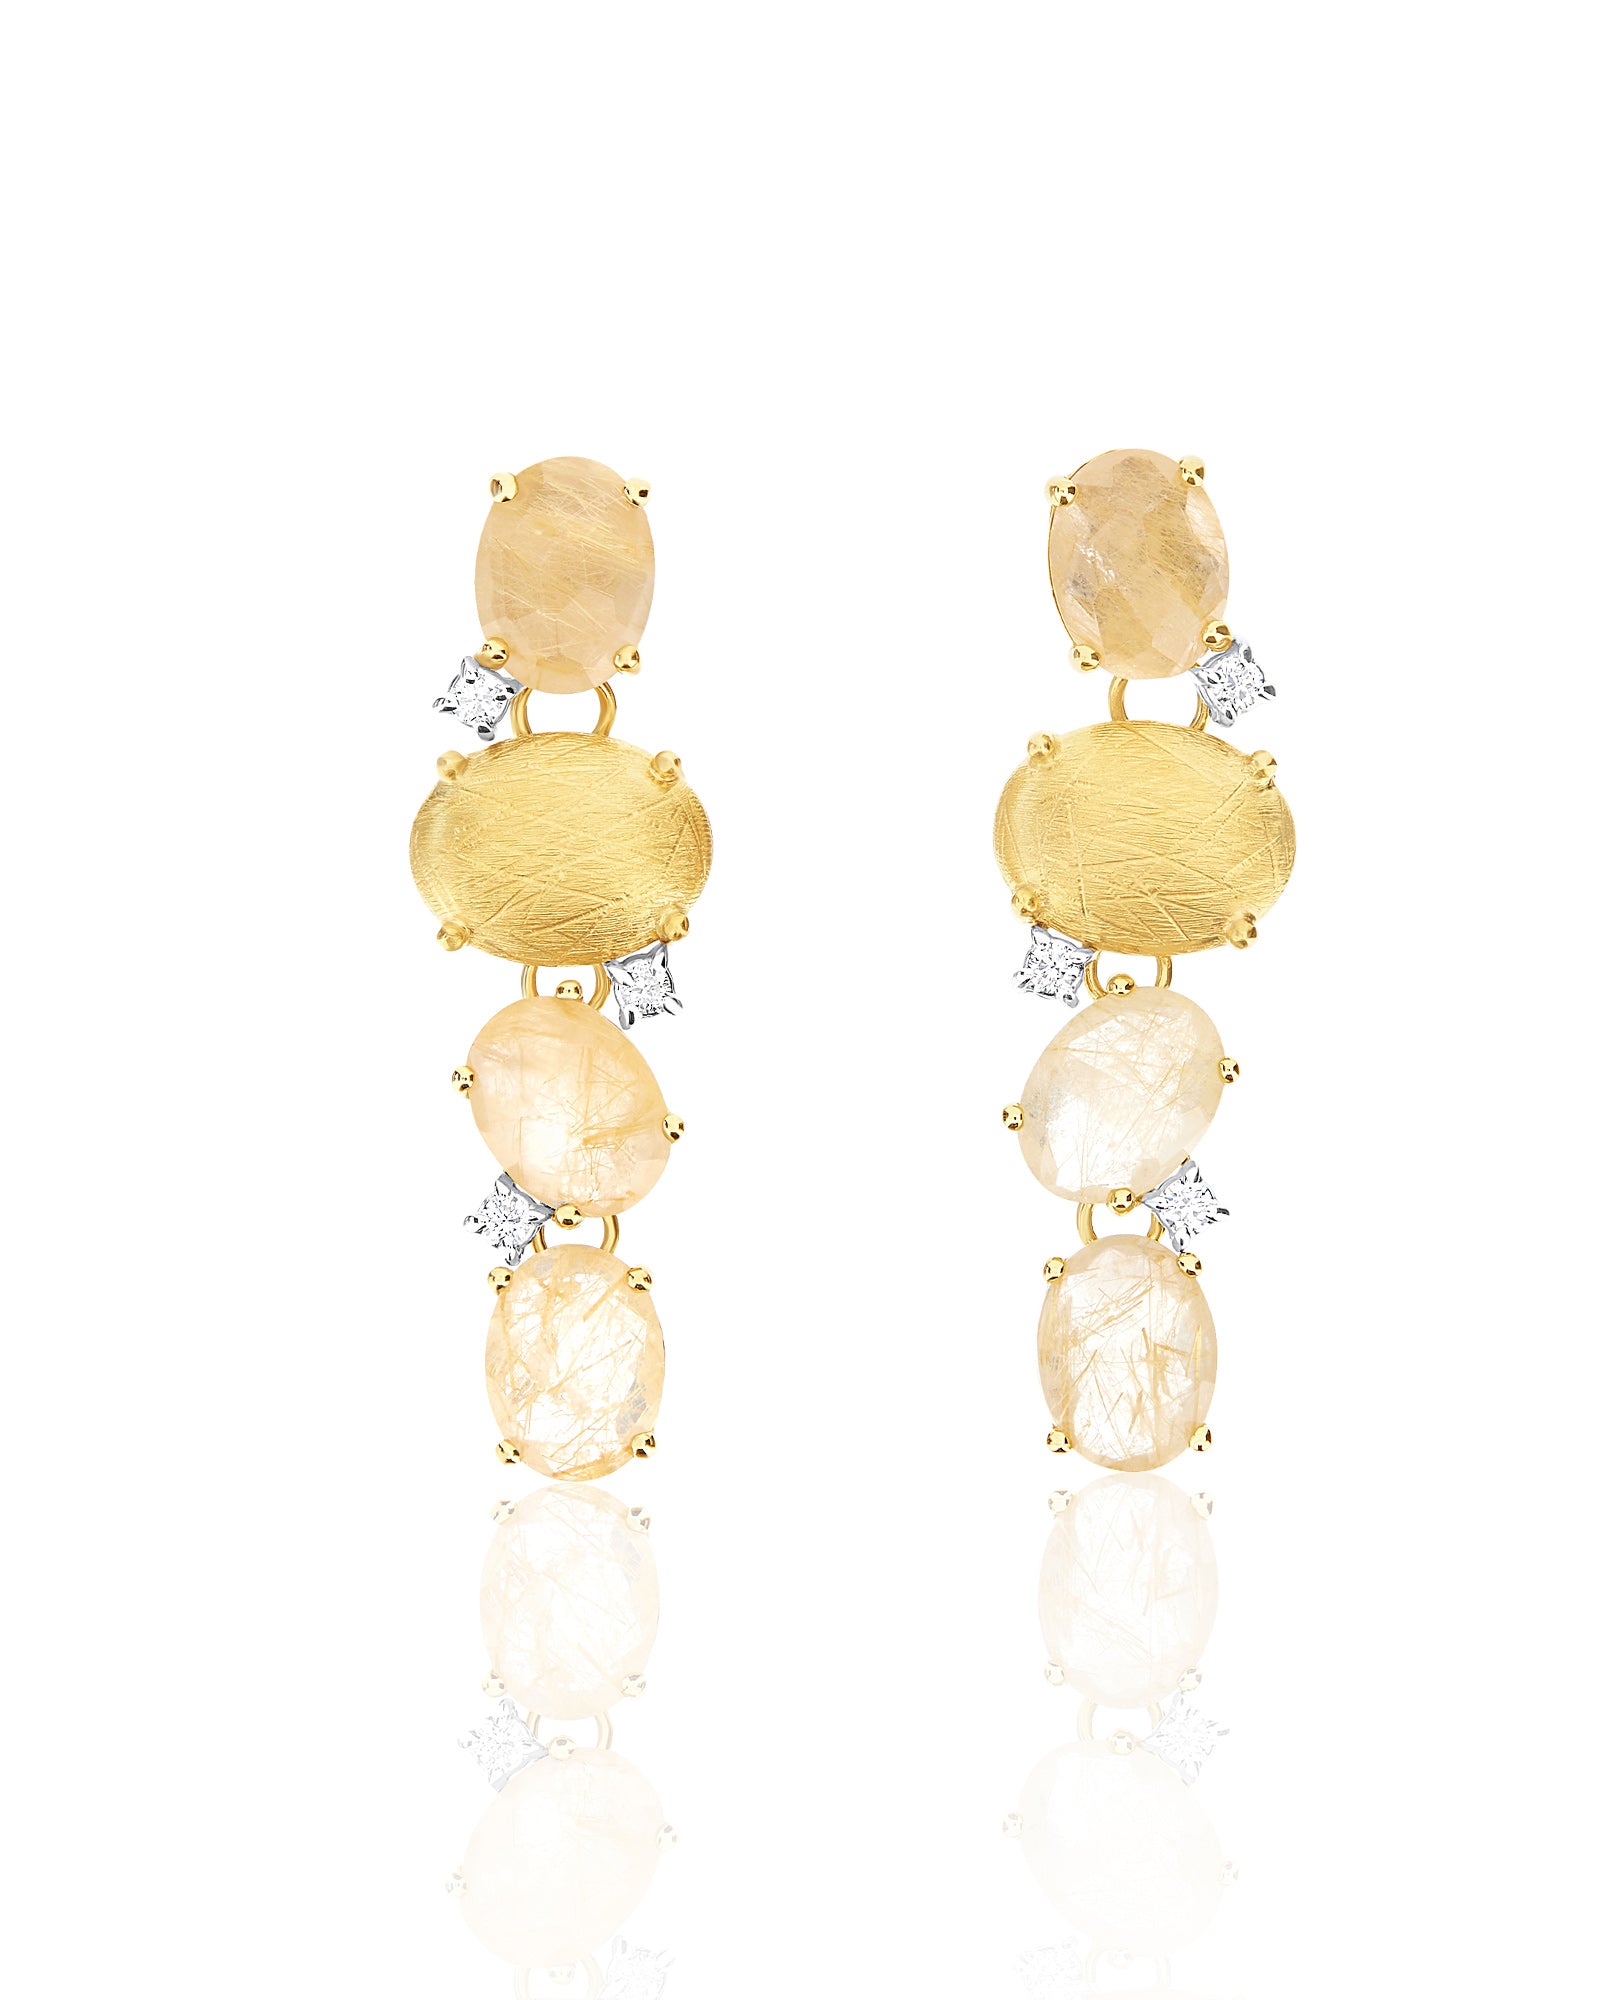 "Ipanema" Yellow rutilated quartz earrings